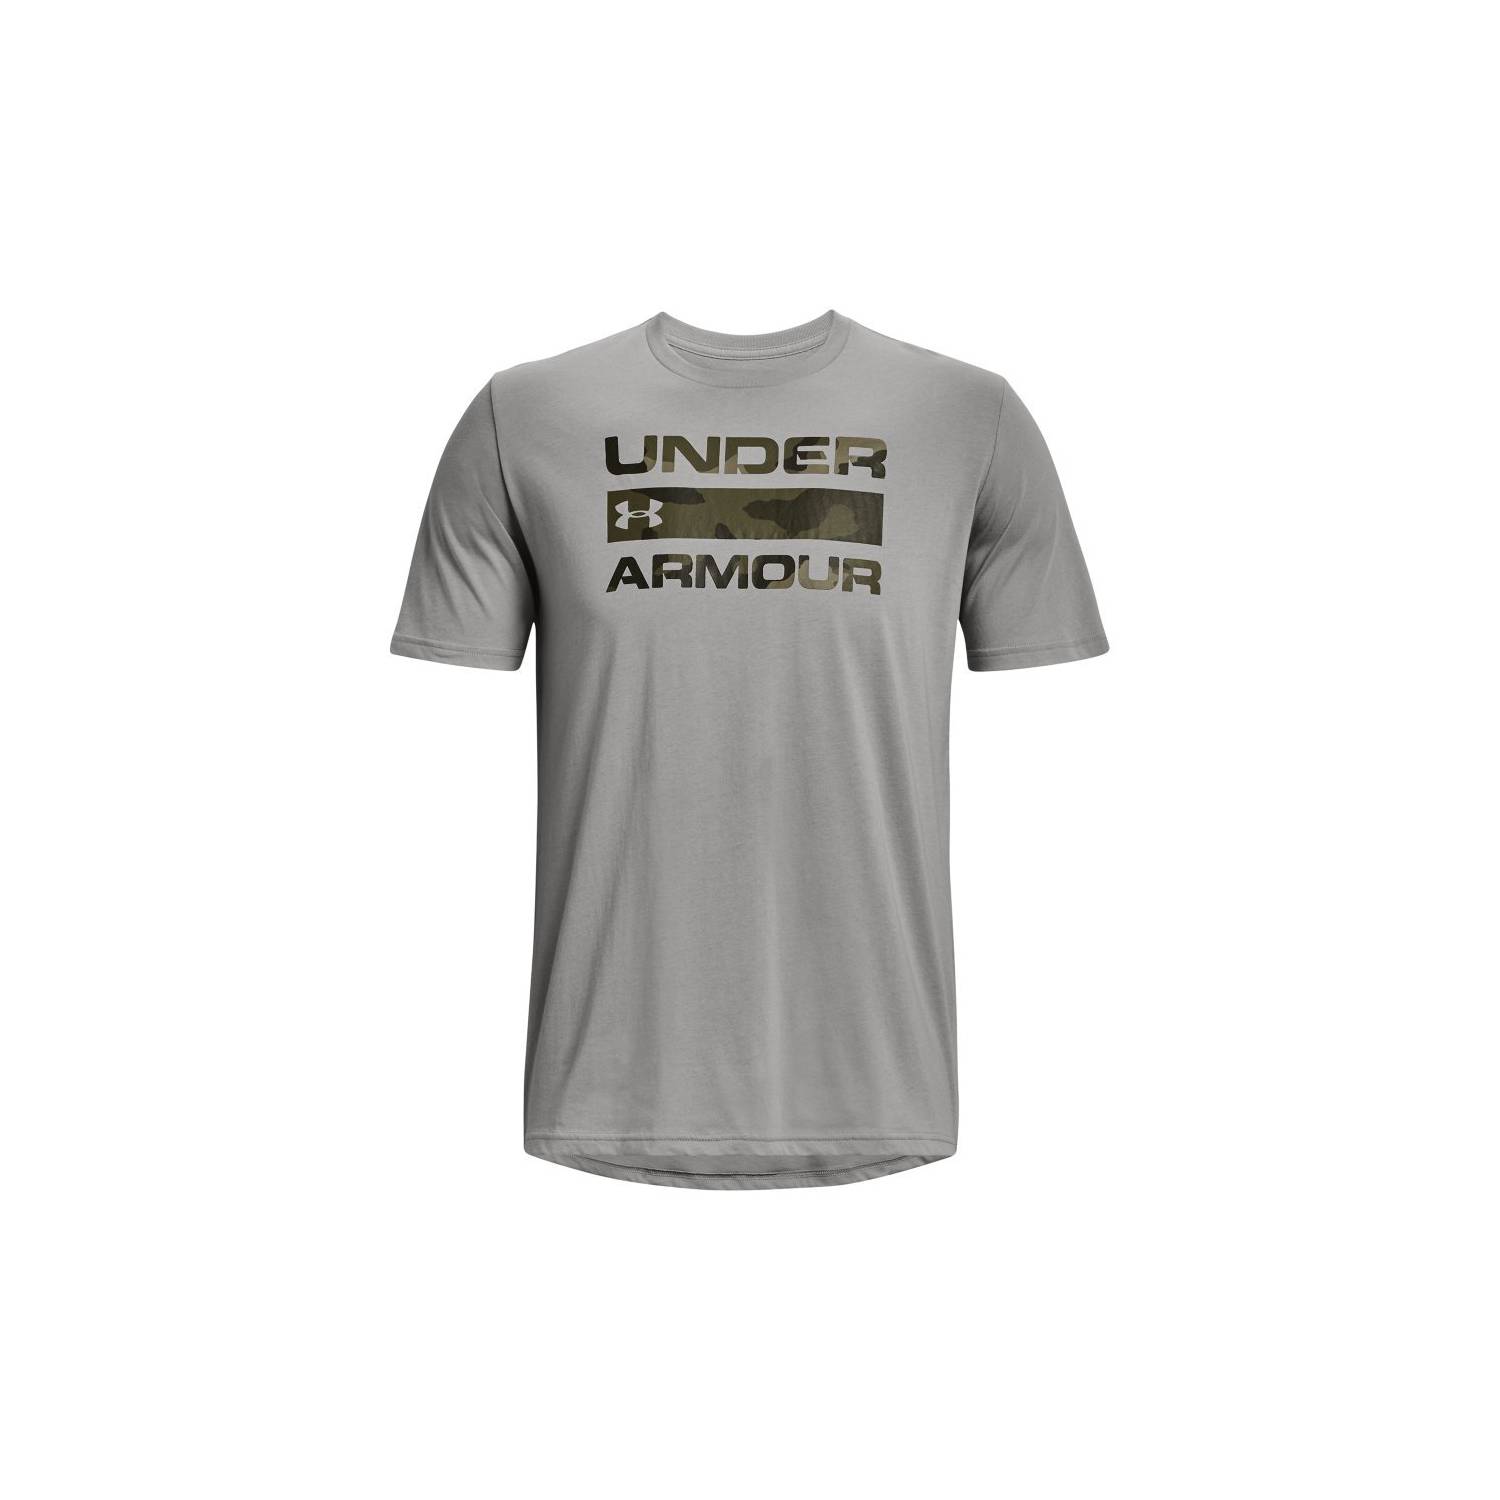 Camiseta Under Armour Hombre Stacked-Gris UNDER ARMOUR falabella.com